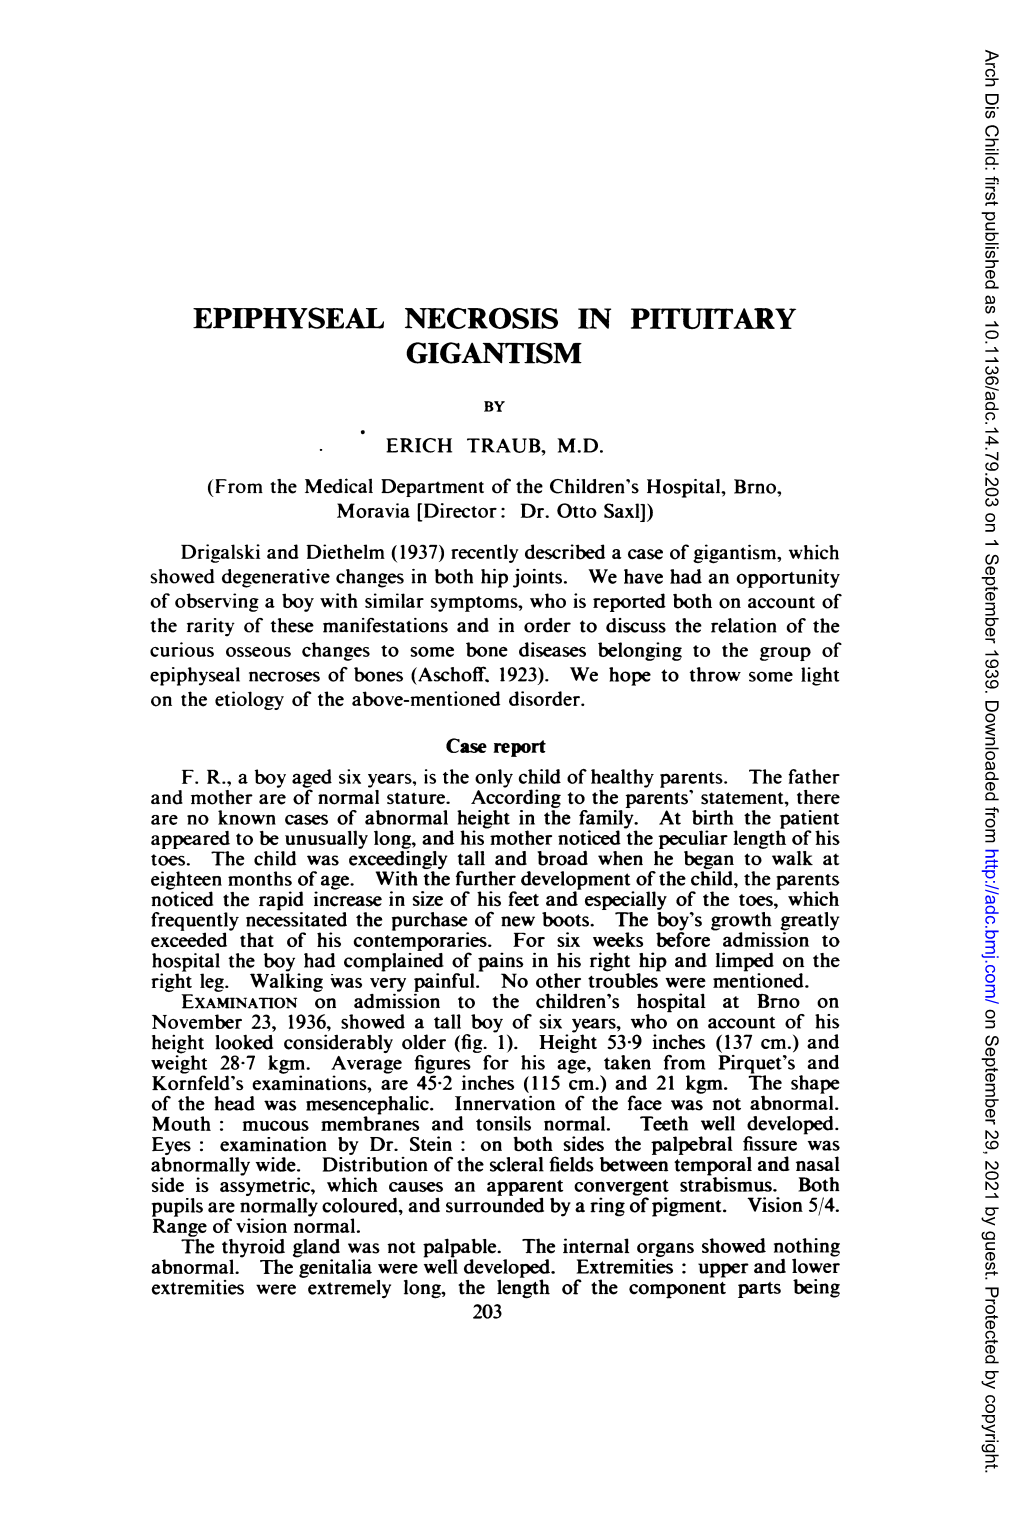 Epiphyseal Necrosis in Pituitary Gigantism